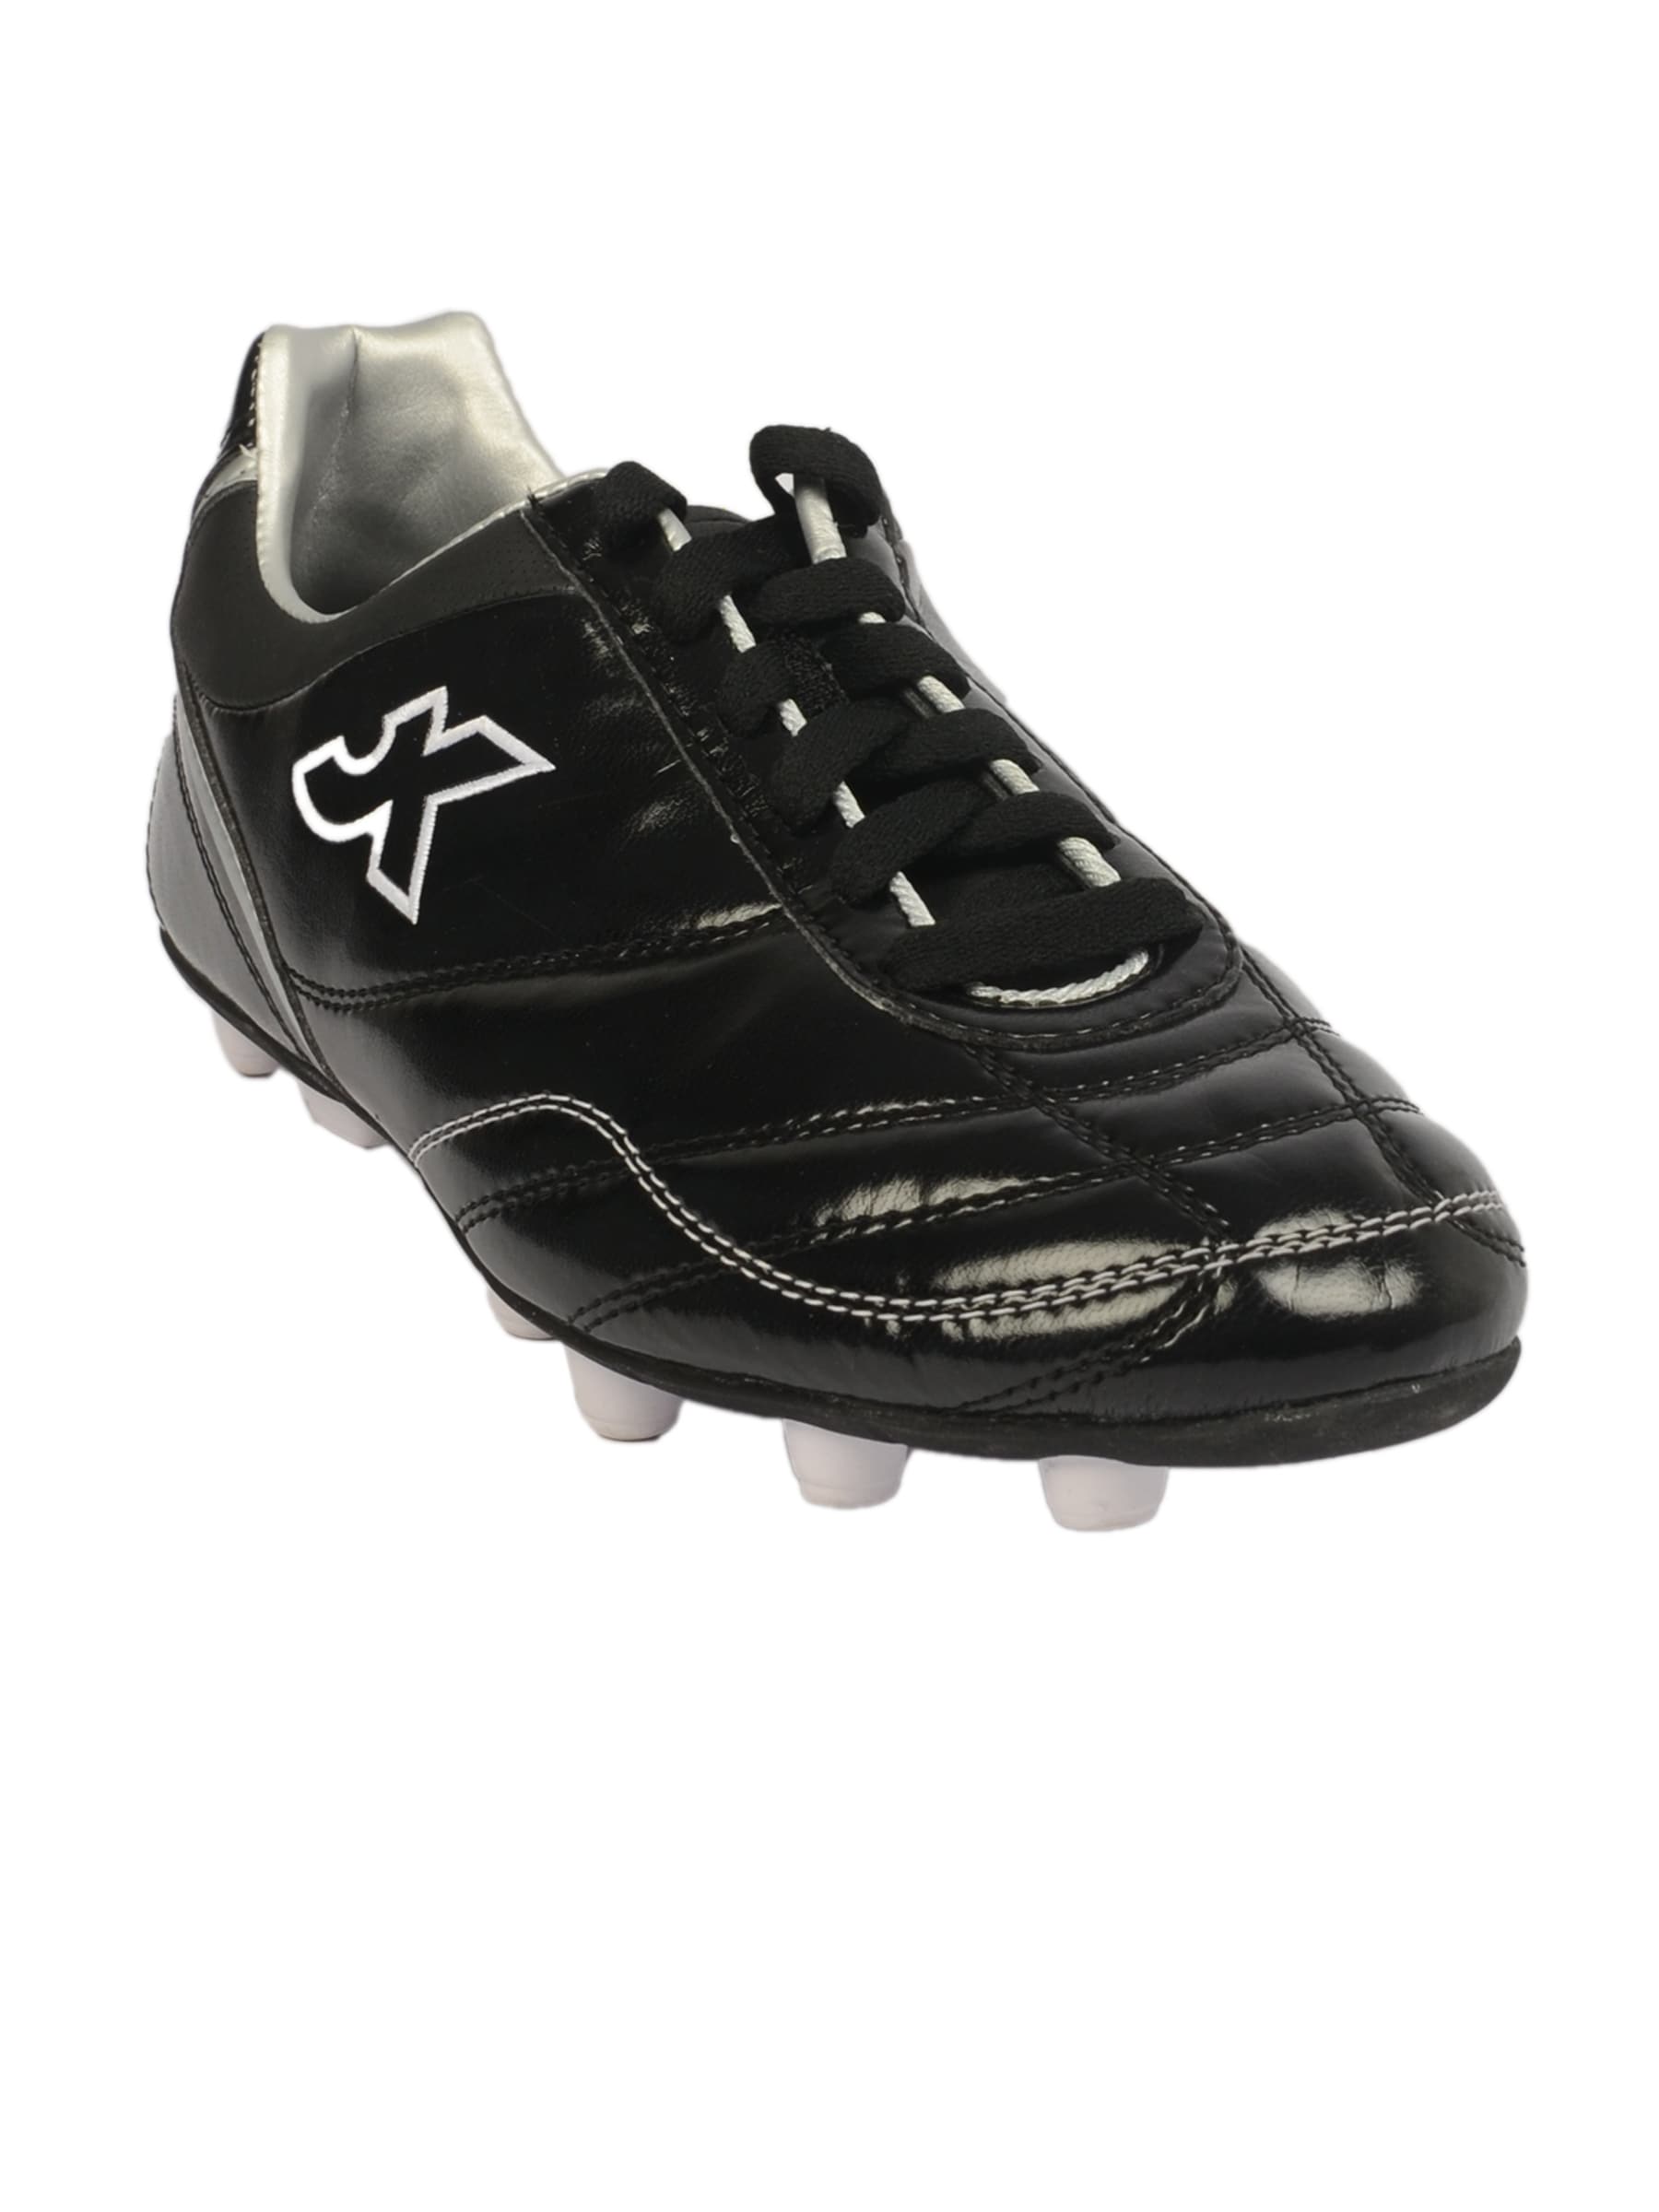 Kipsta Men's F300 Football Shoe